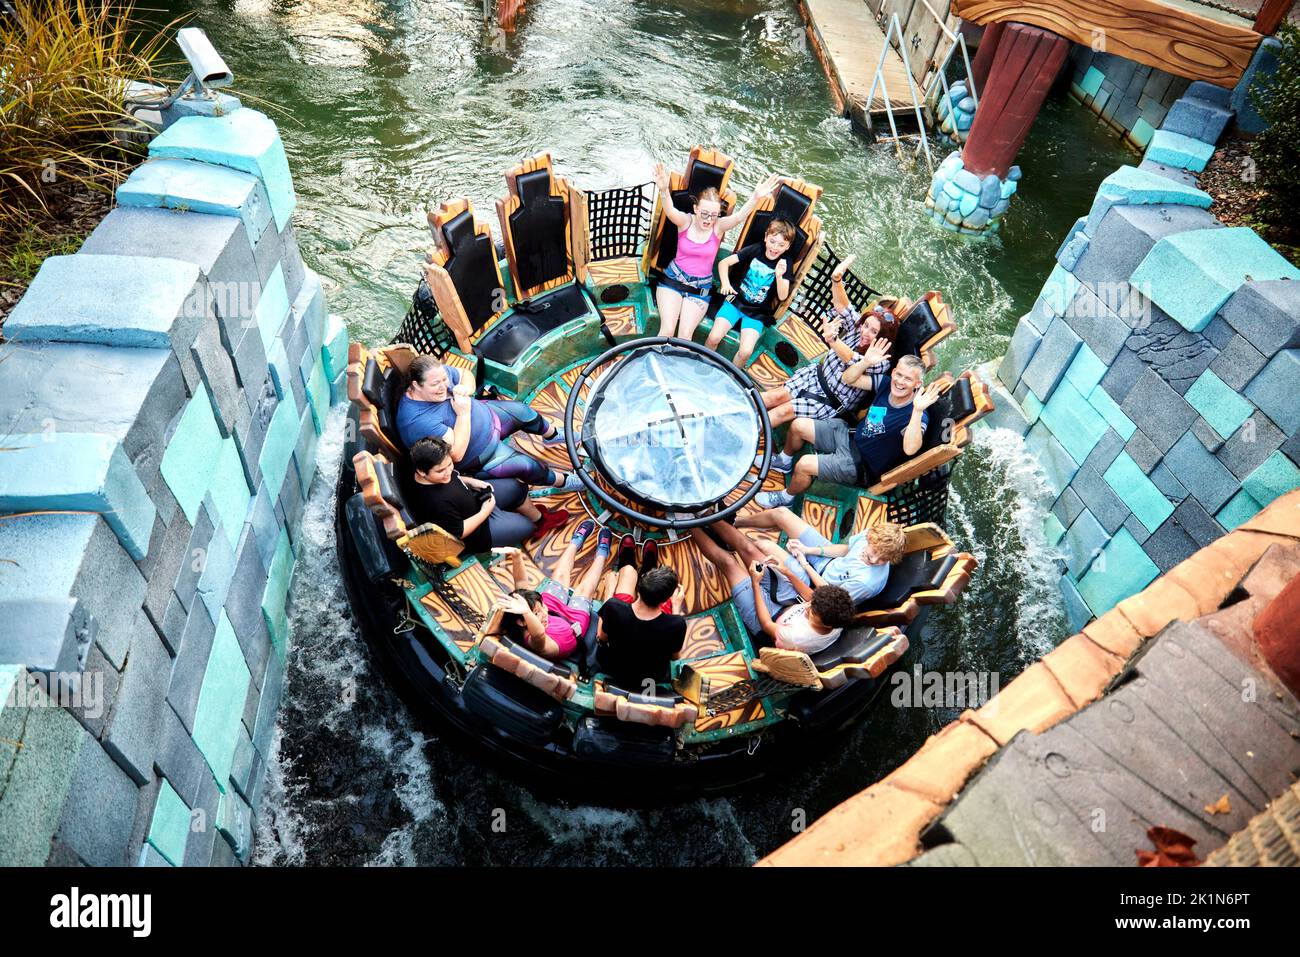 Universal Studios Florida theme Popeye Raging Rapids Water Ride Stock Photo